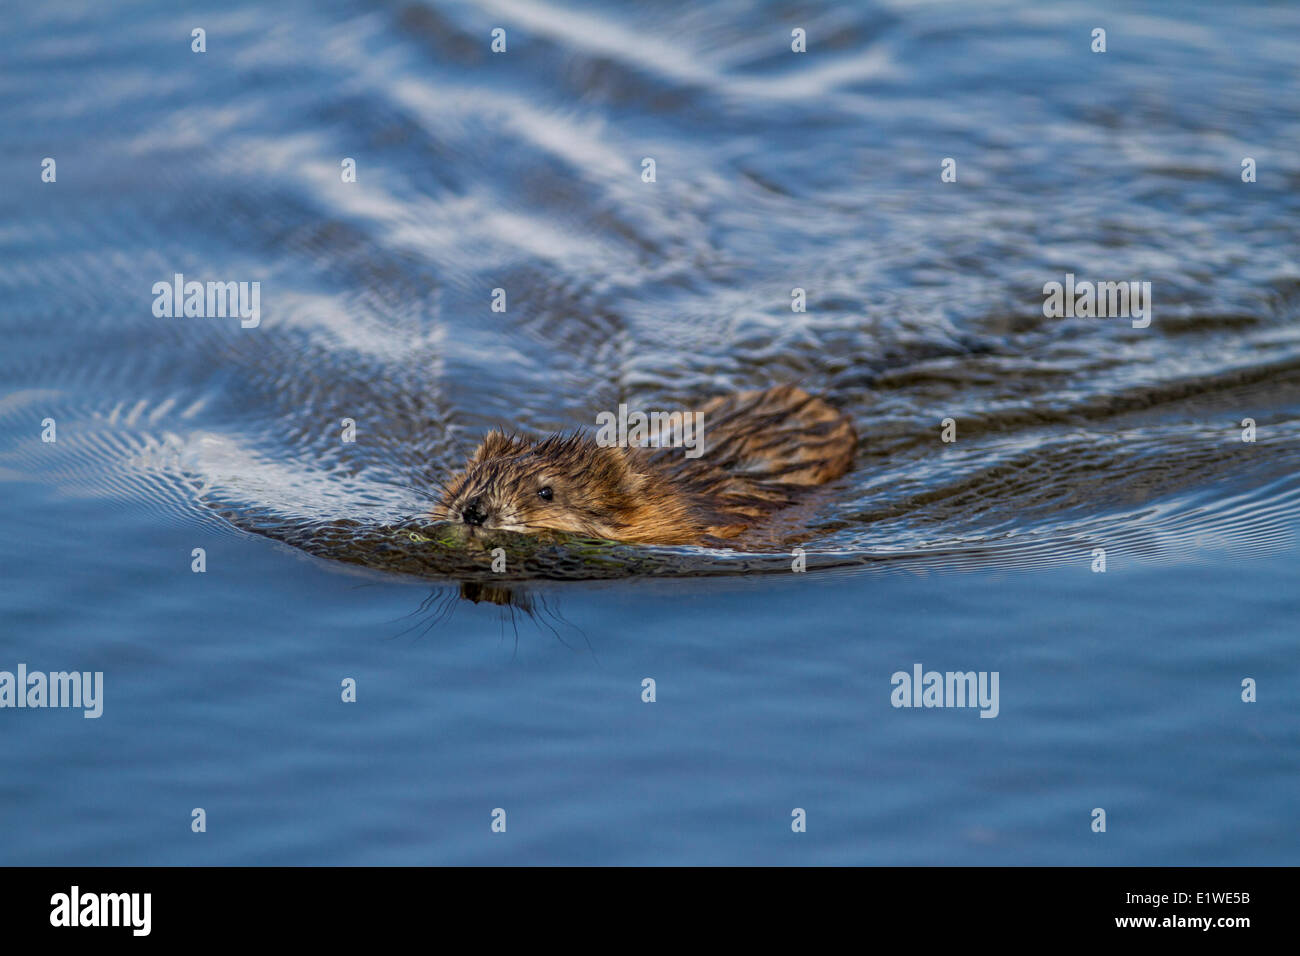 Muskrat (Ondatra zibethicus) Swimming in a slough, Strathmore, Alberta, Canada Stock Photo